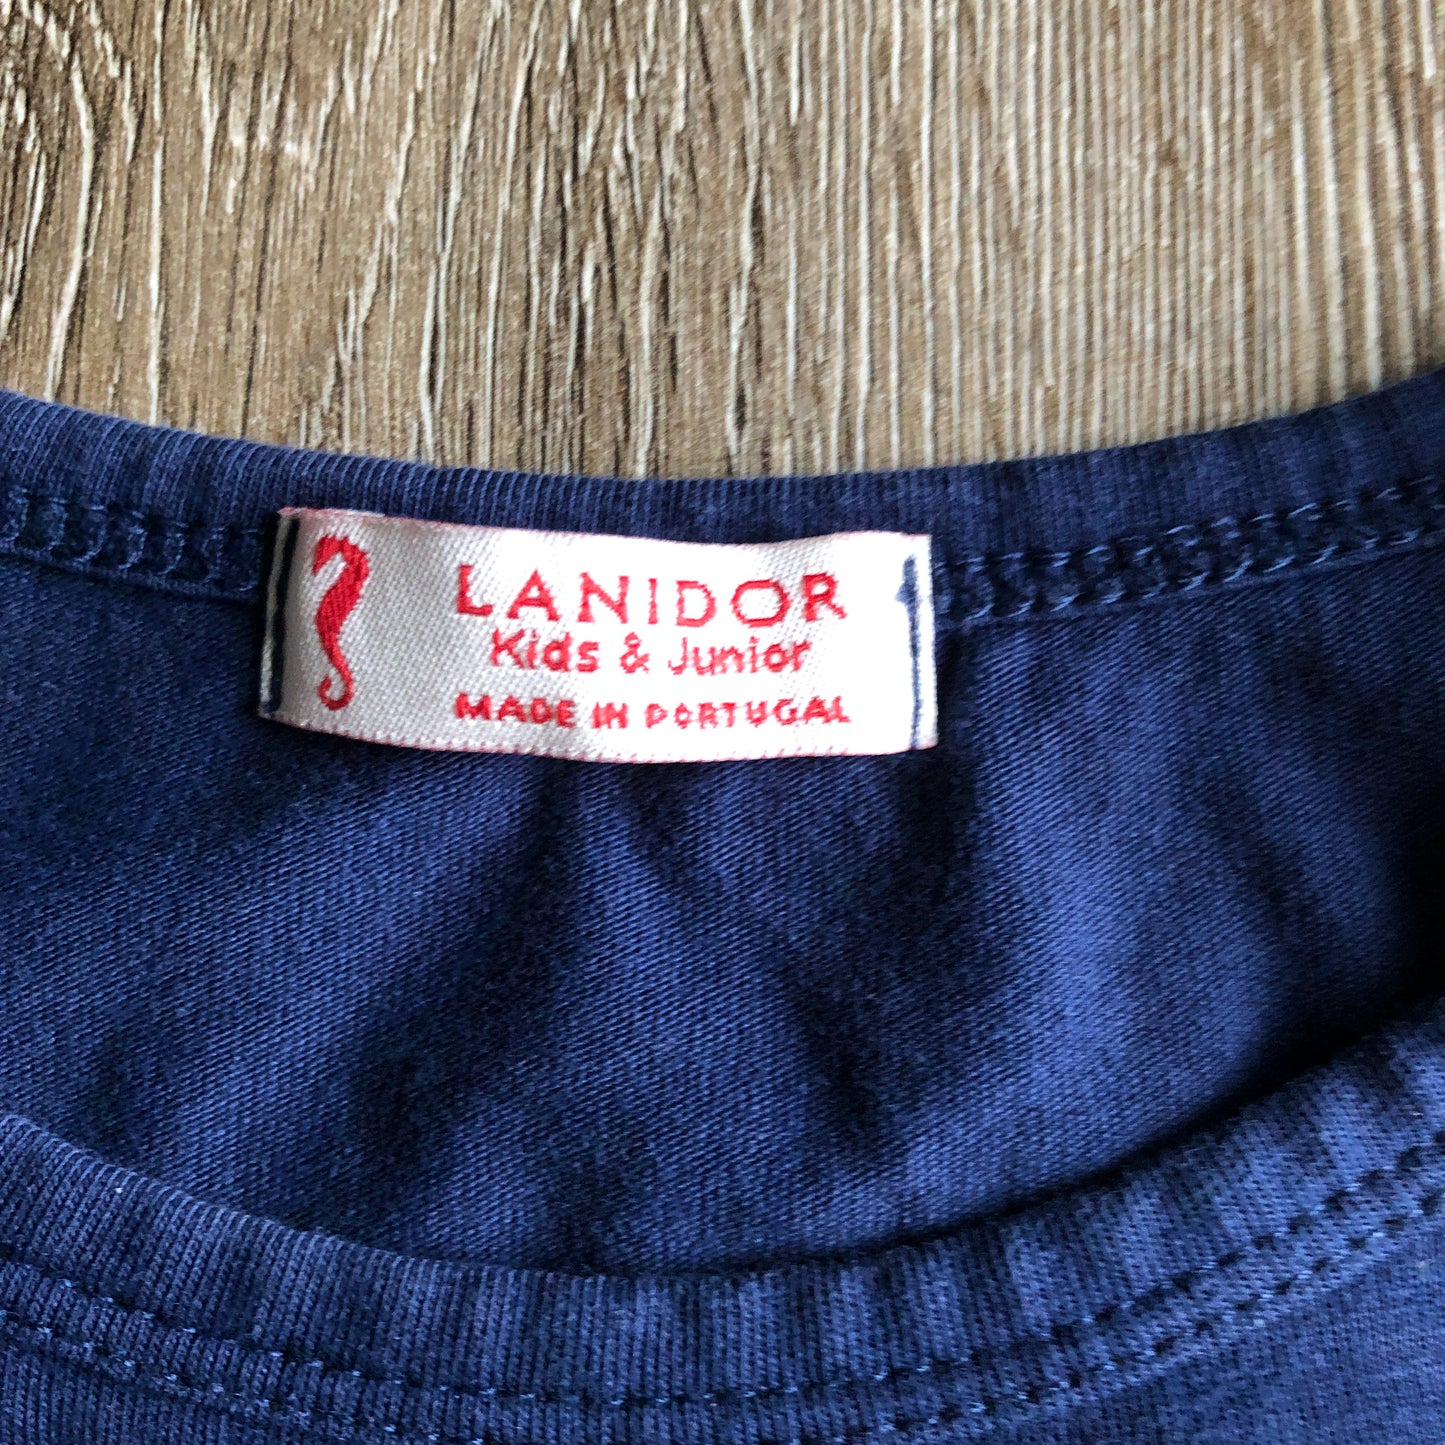 Lanidor T-shirt